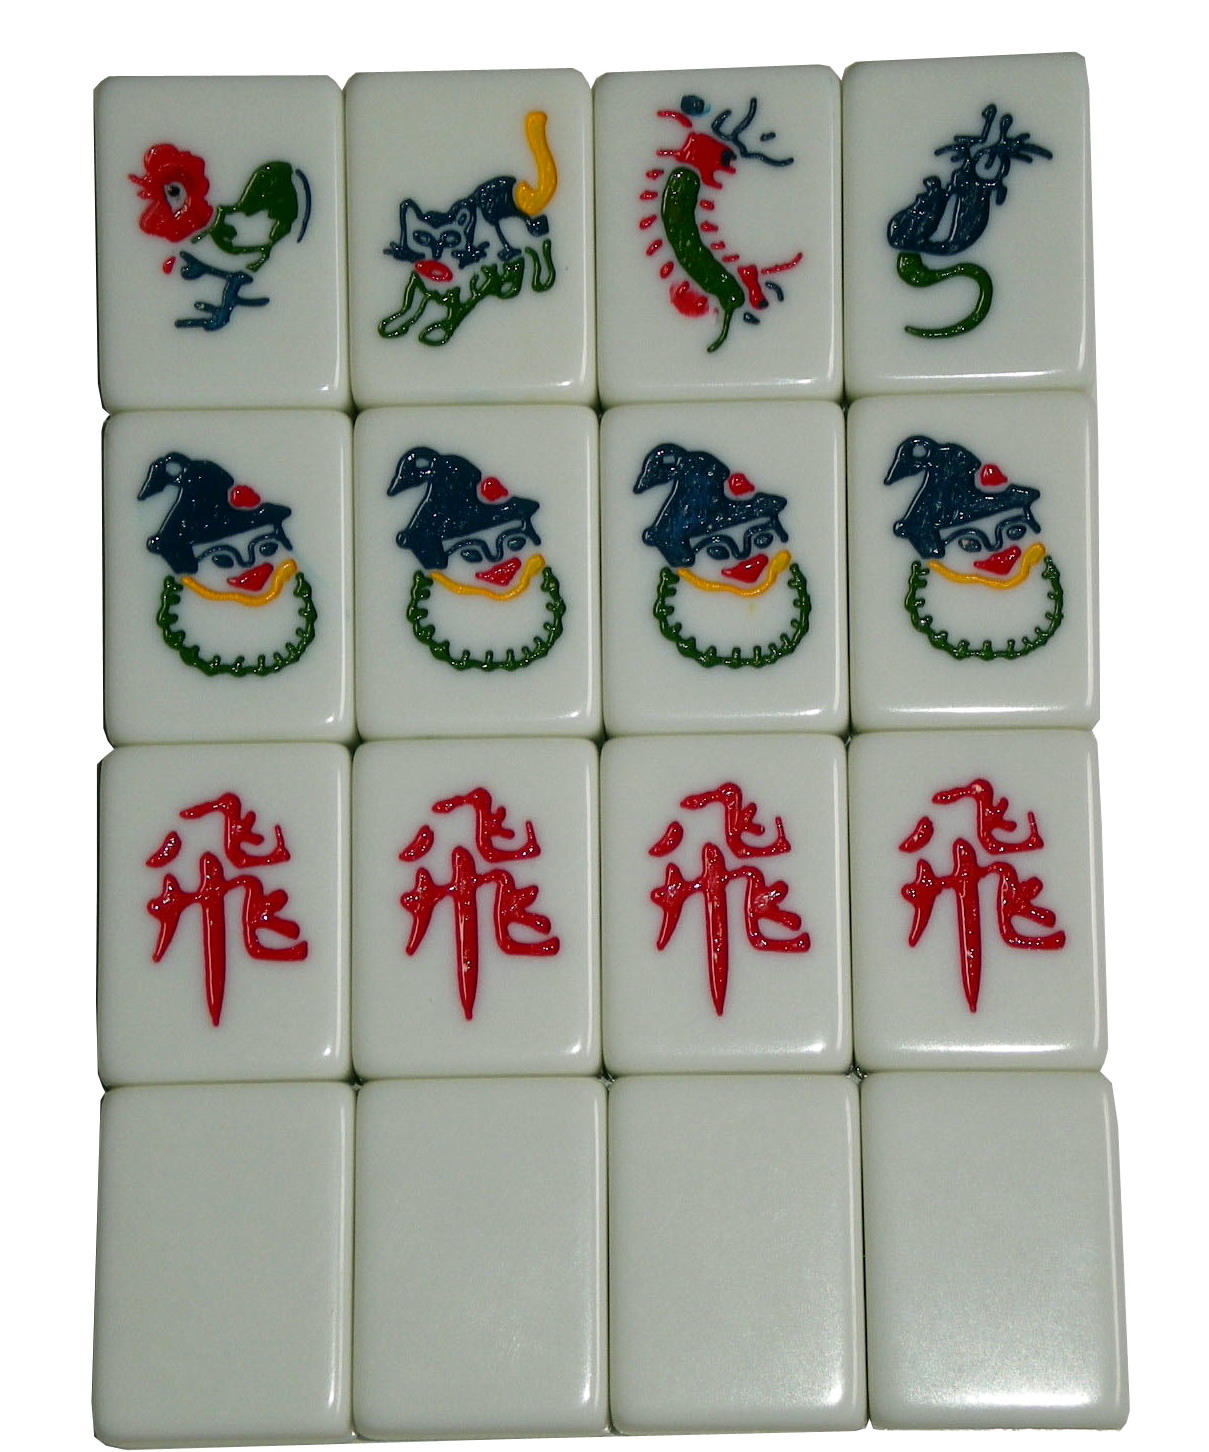 Singapore mahjong tiles